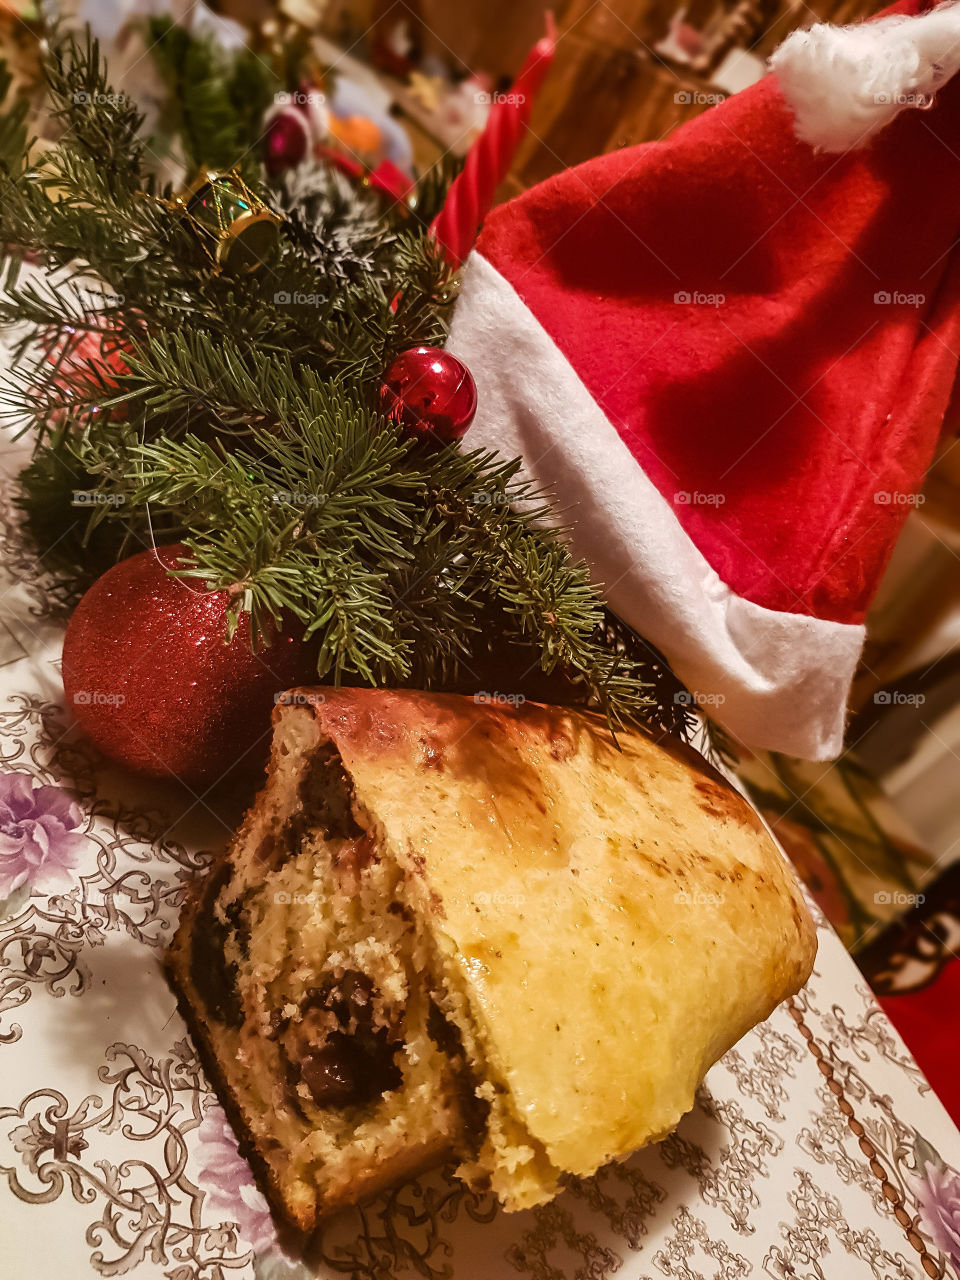 Sweet Bread,
december ,christmas , people ,saturday ,wealth ,snow ,love ,xmas ,merrychristmas ,christmastime ,holiday ,holidays ,christmastree,christmasiscoming , like ,fun ,santa ,santaclaus ,christmaslights ,january ,tree ,happyholidays ,noel